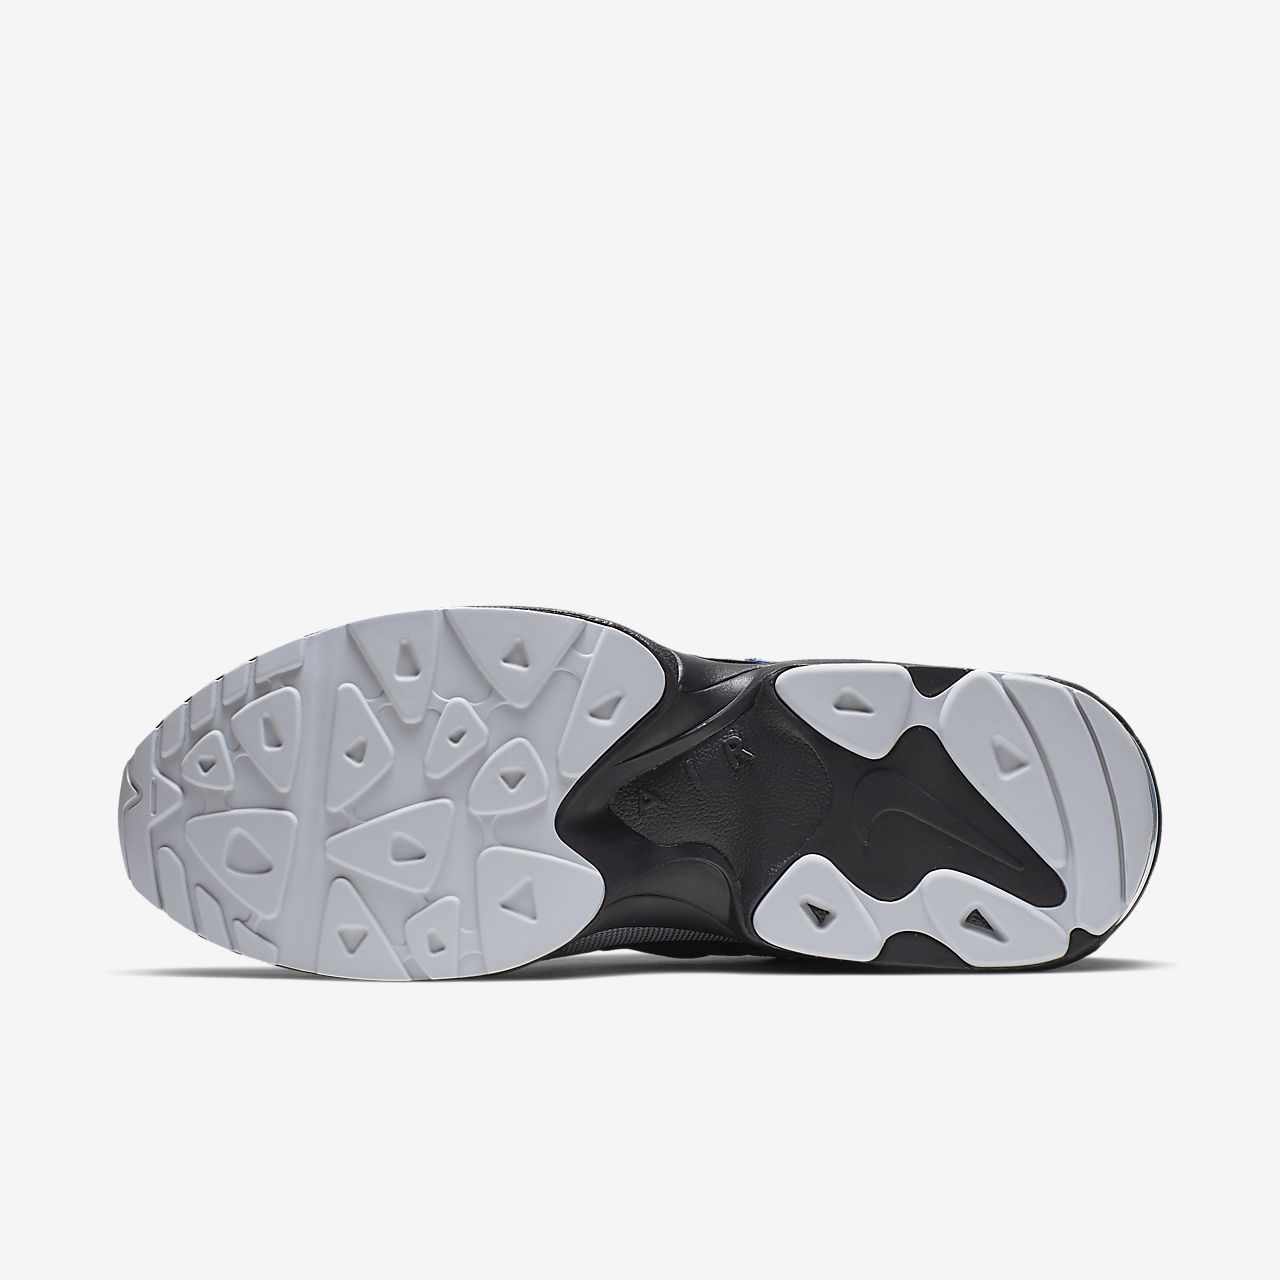 Nike Air Max2 Light - Sneakers - Sort/Grå | DK-38457